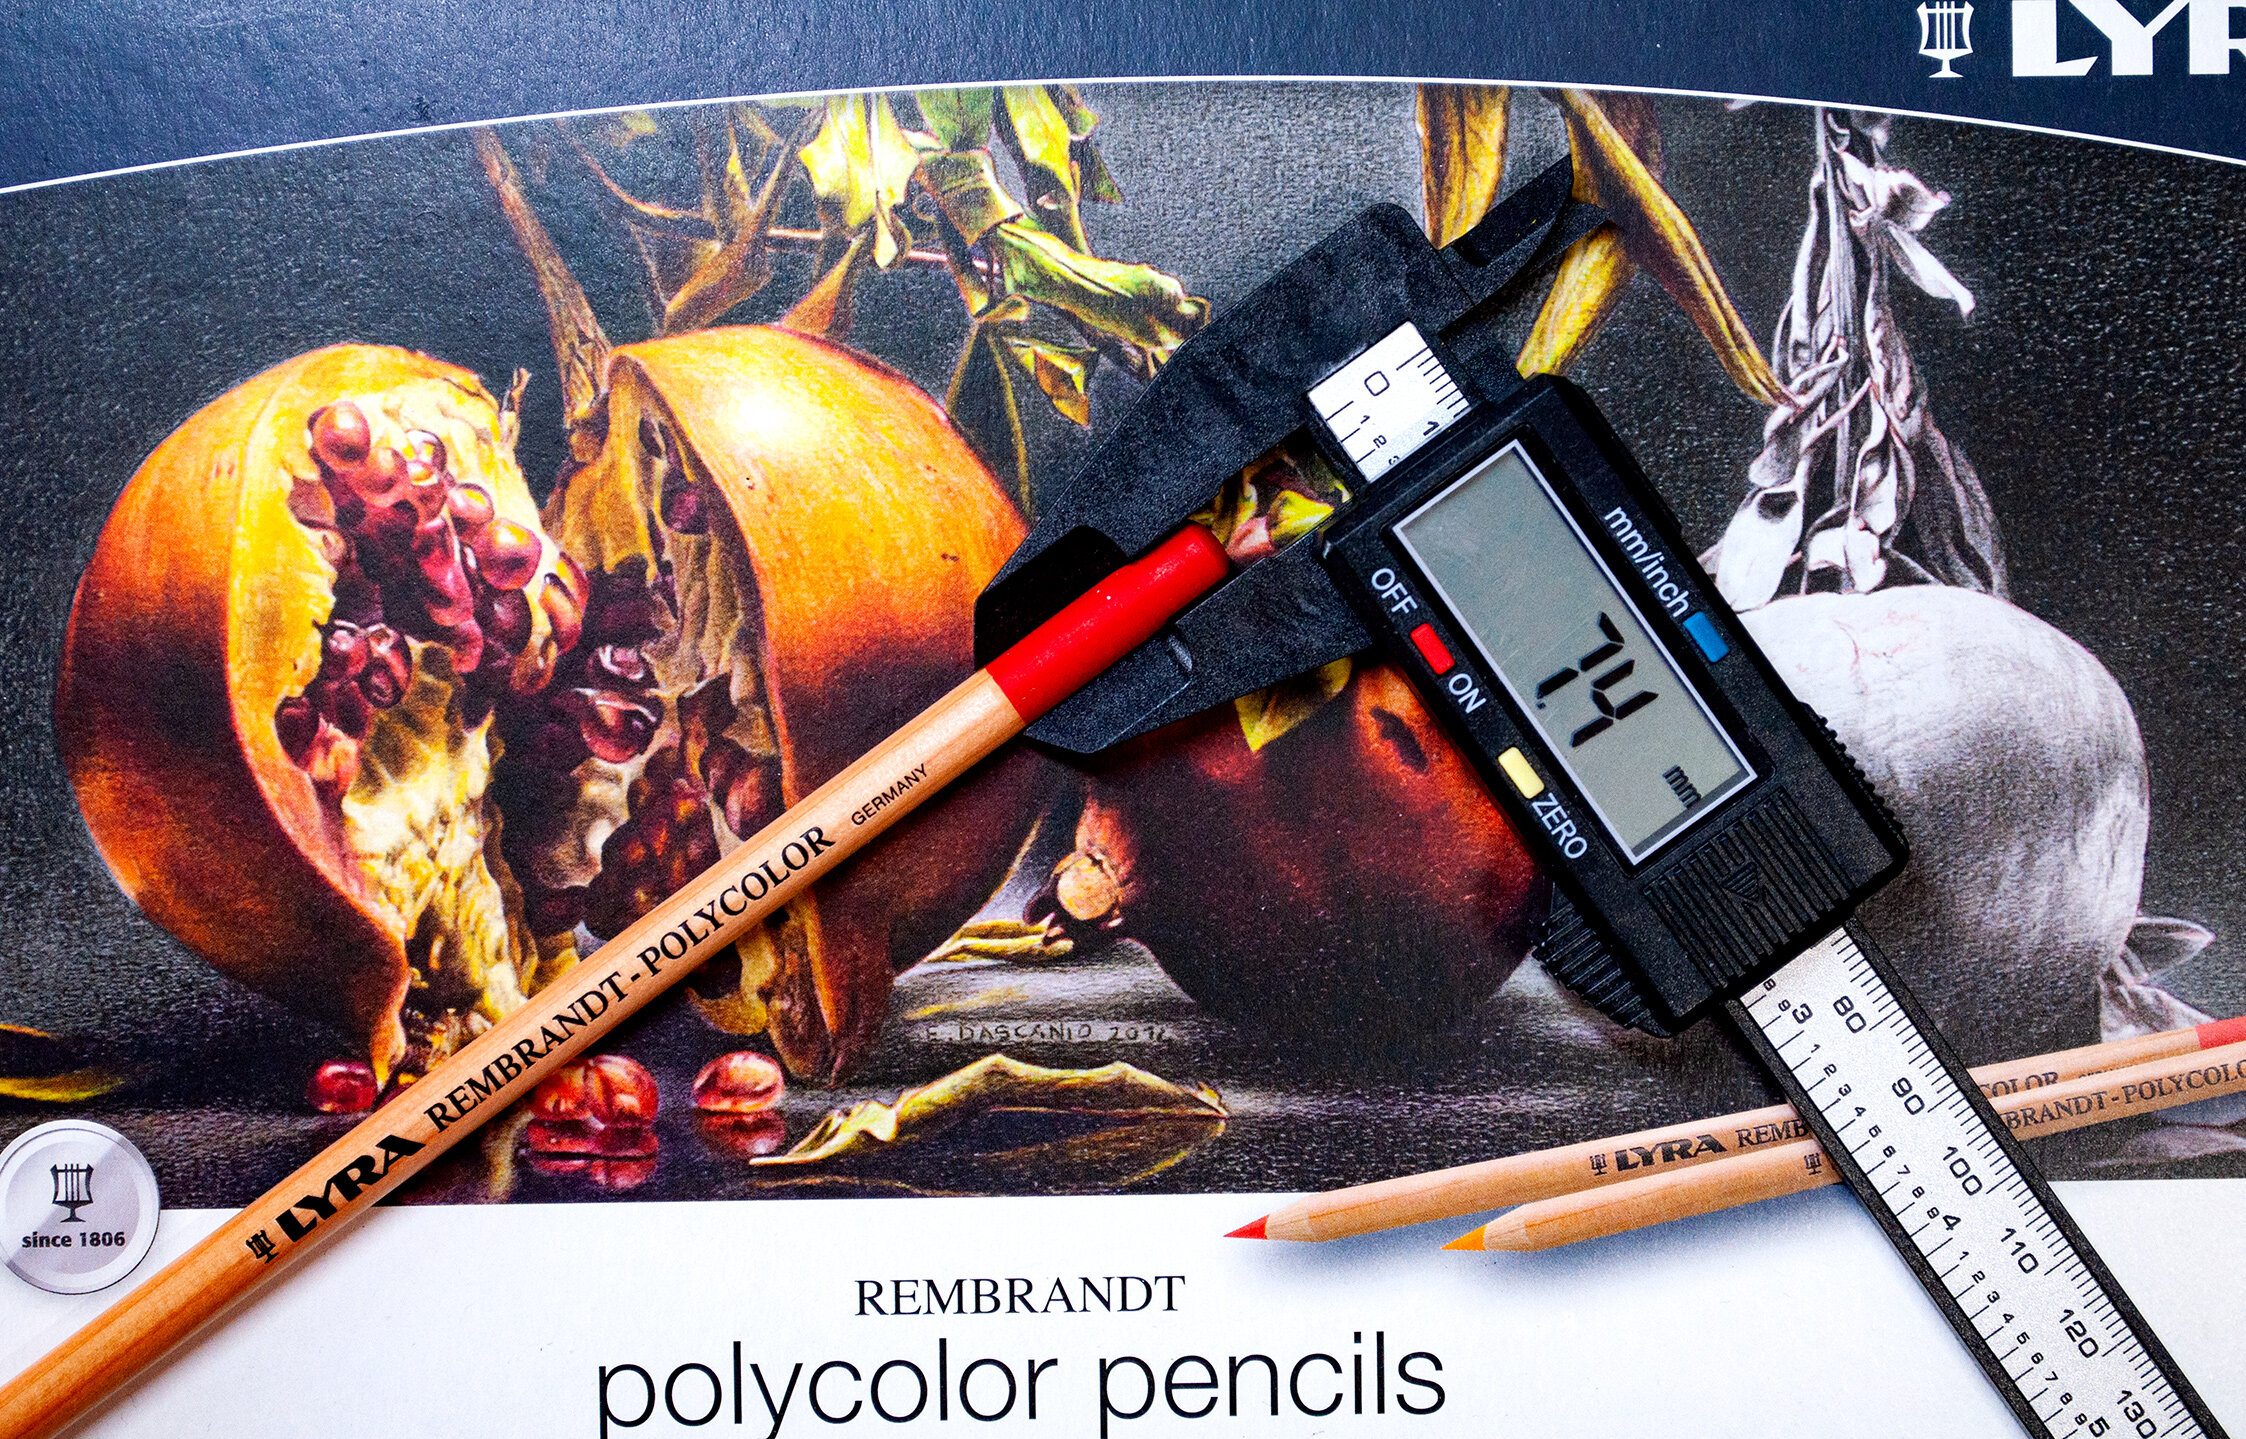 Lyra Skin Tone Pencils — Craft Critique